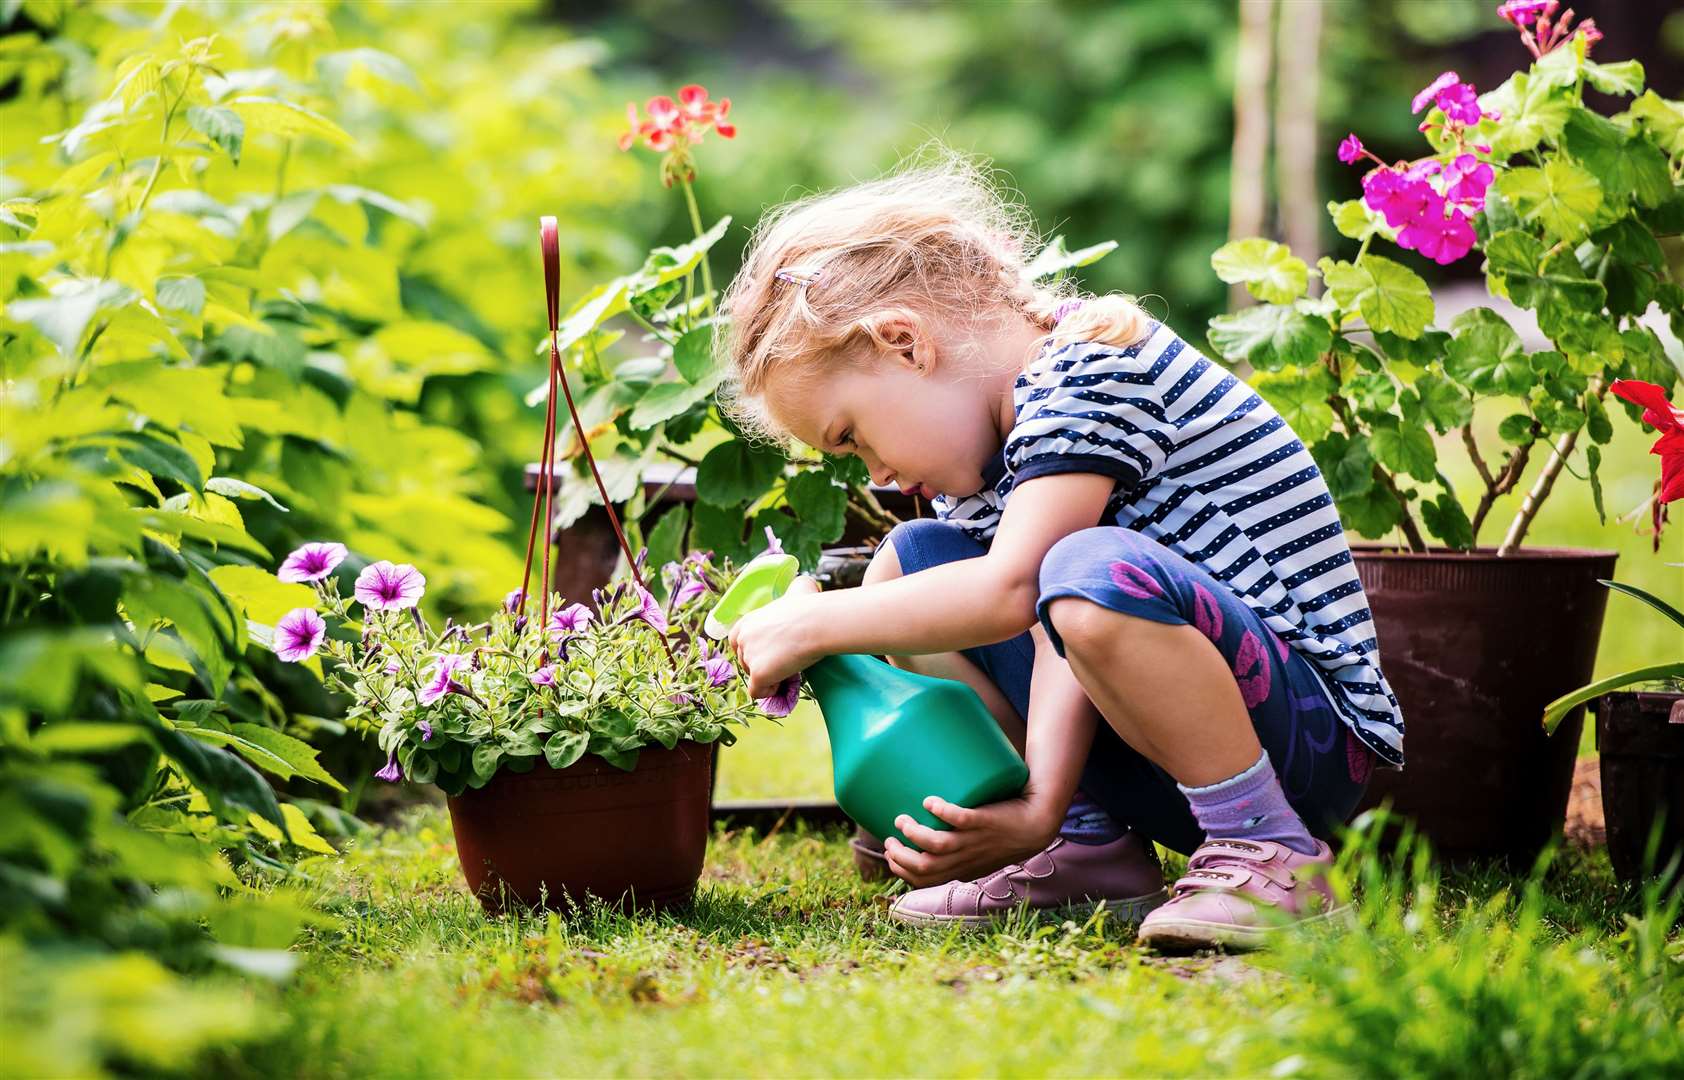 Get some gardening tips for little ones from the 'Skinny Jean Gardener'